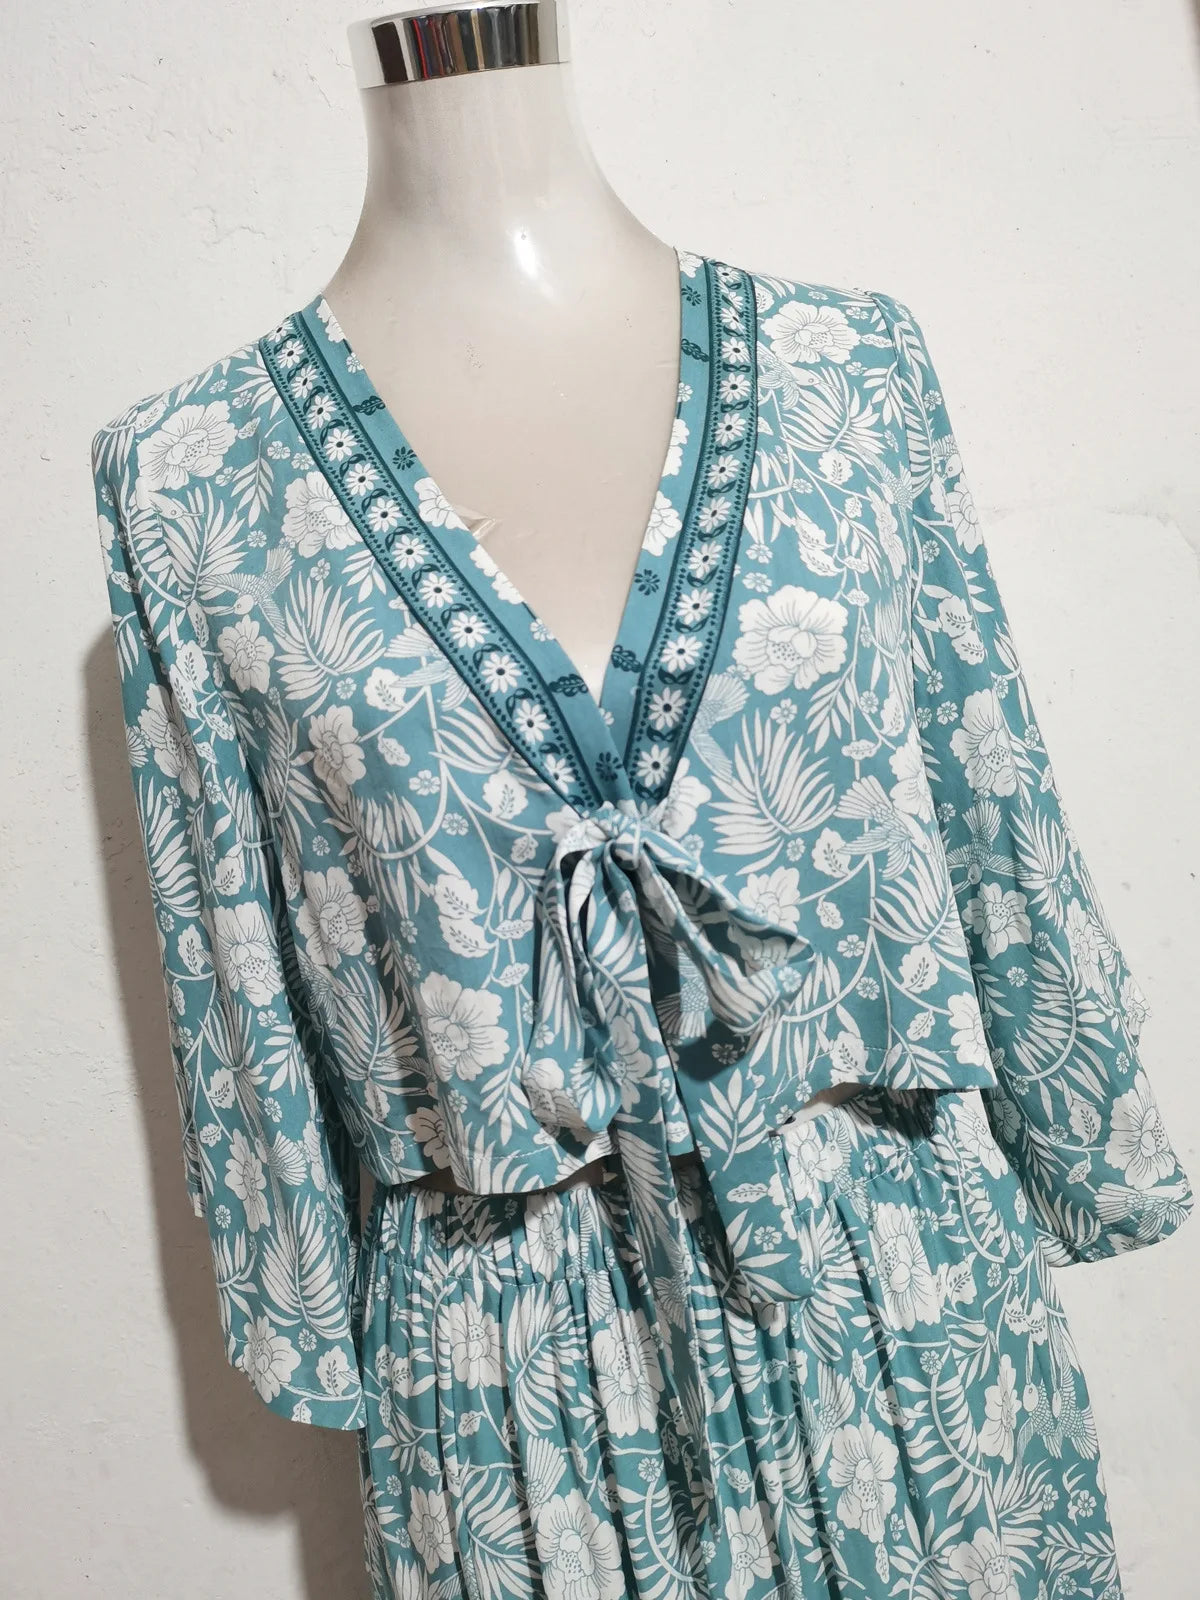 FashionSierra-Beach  2 Piece  Cotton Rayon  Floral Print  Skirts Suit  Maxi  Vintage  Crop Top  Summer  Blouses  Skirt Sets Boho Dress